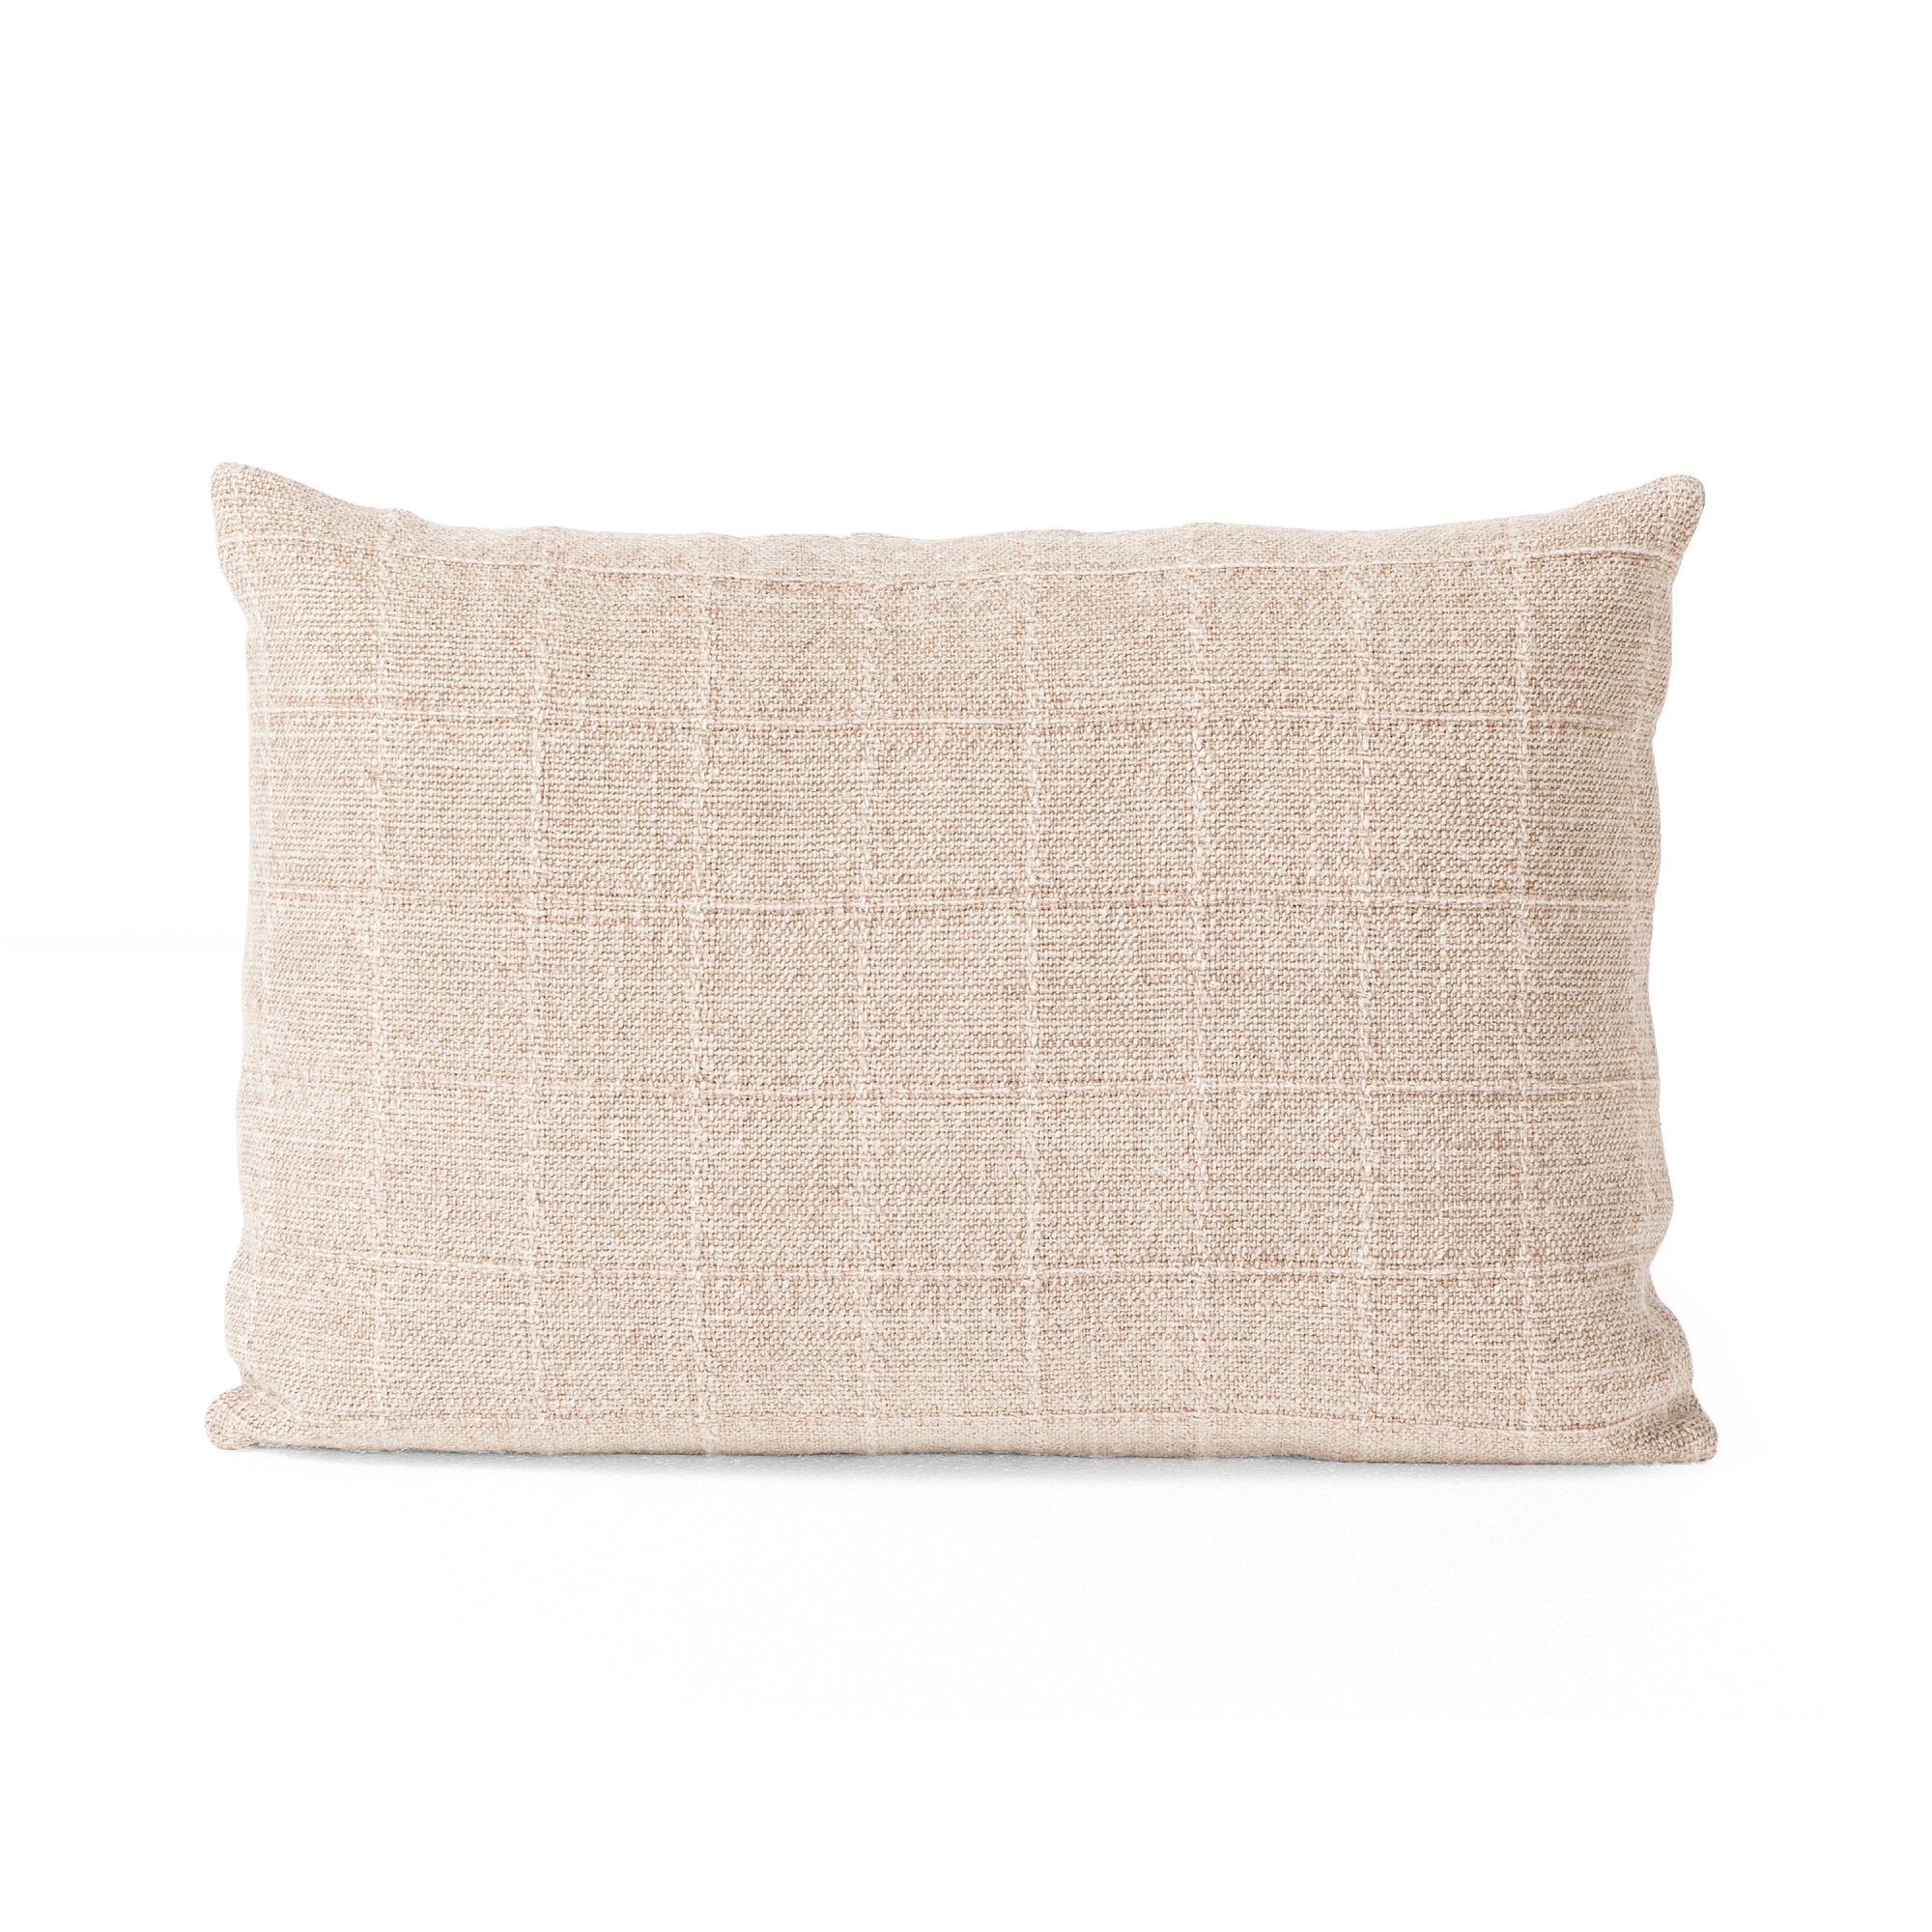 Block Linen Pillow - Westport - Available in 2 Sizes